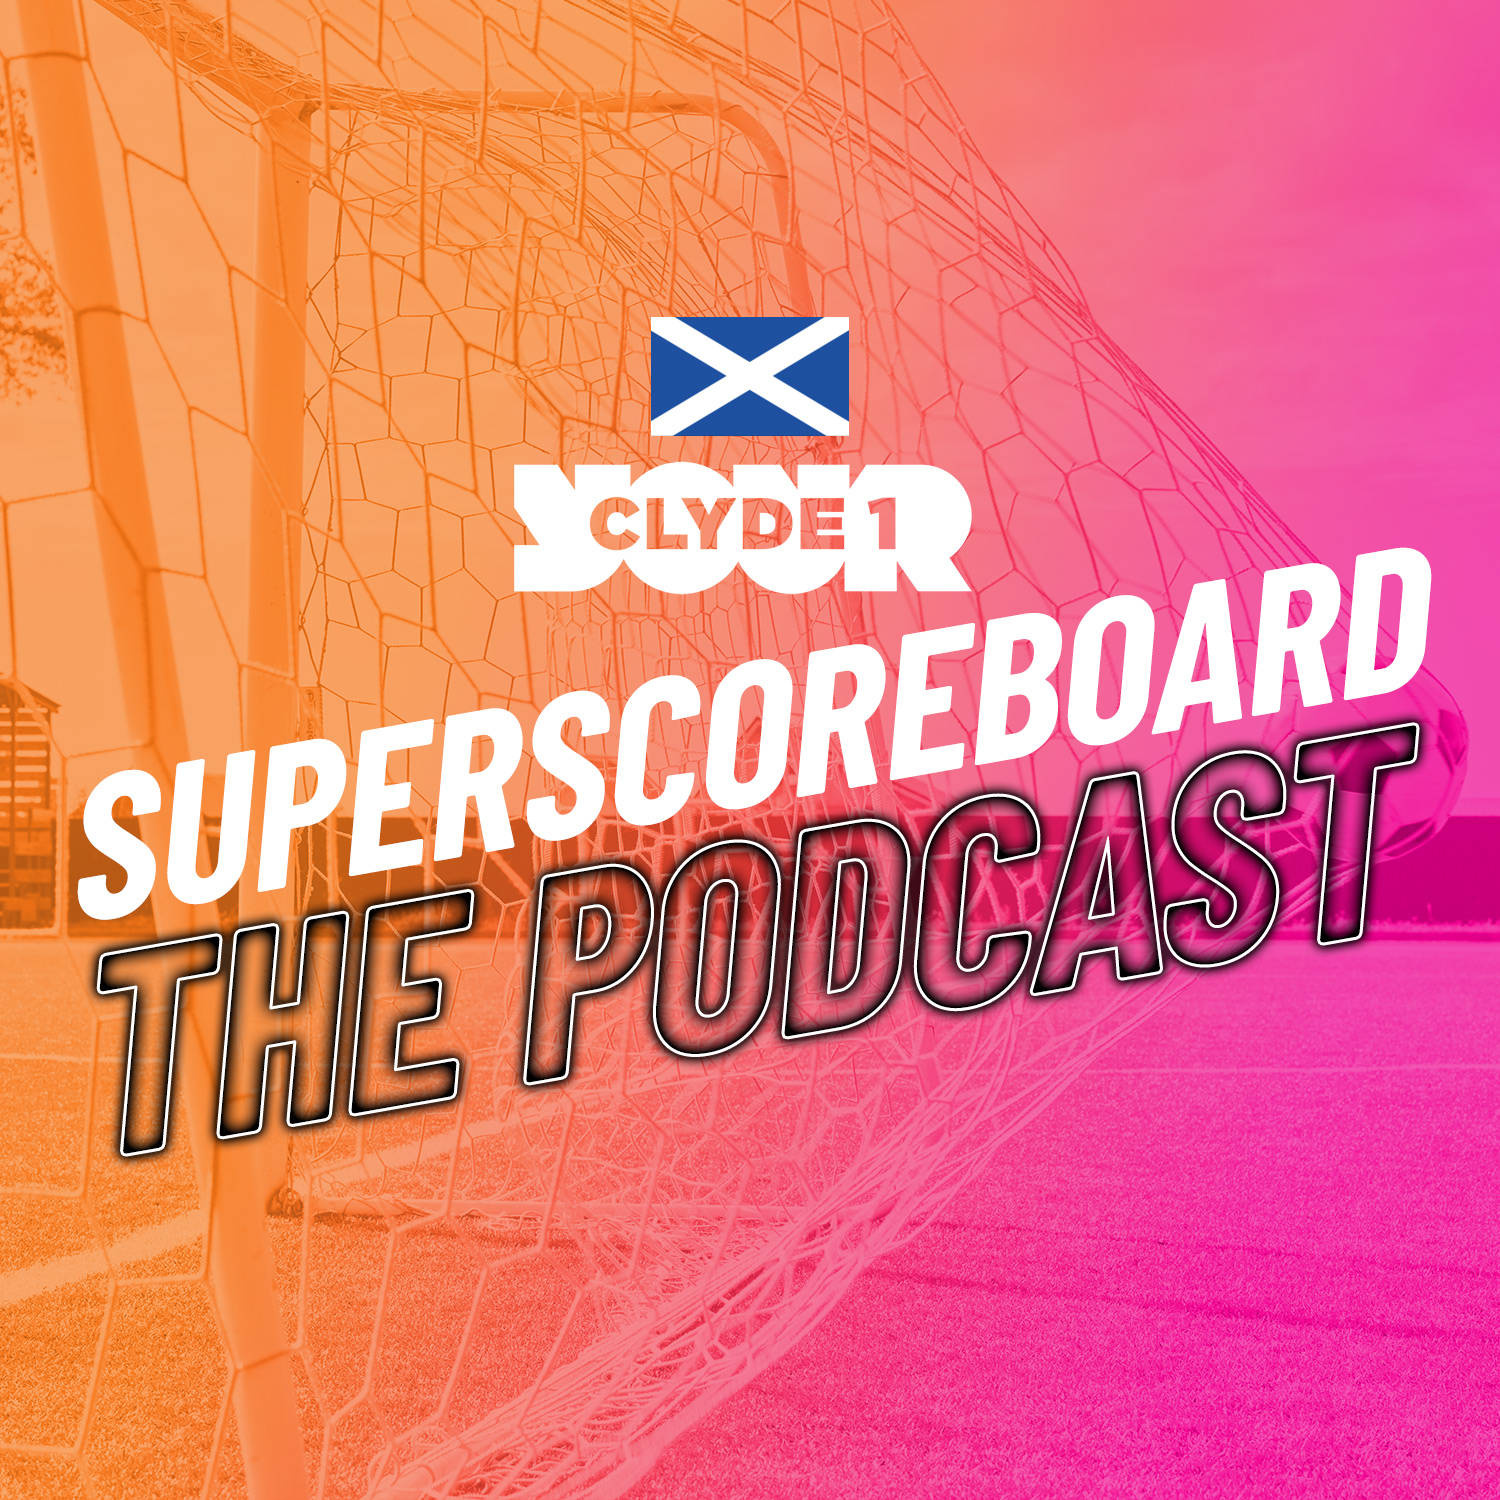 Friday 8th December Clyde 1 Superscoreboard